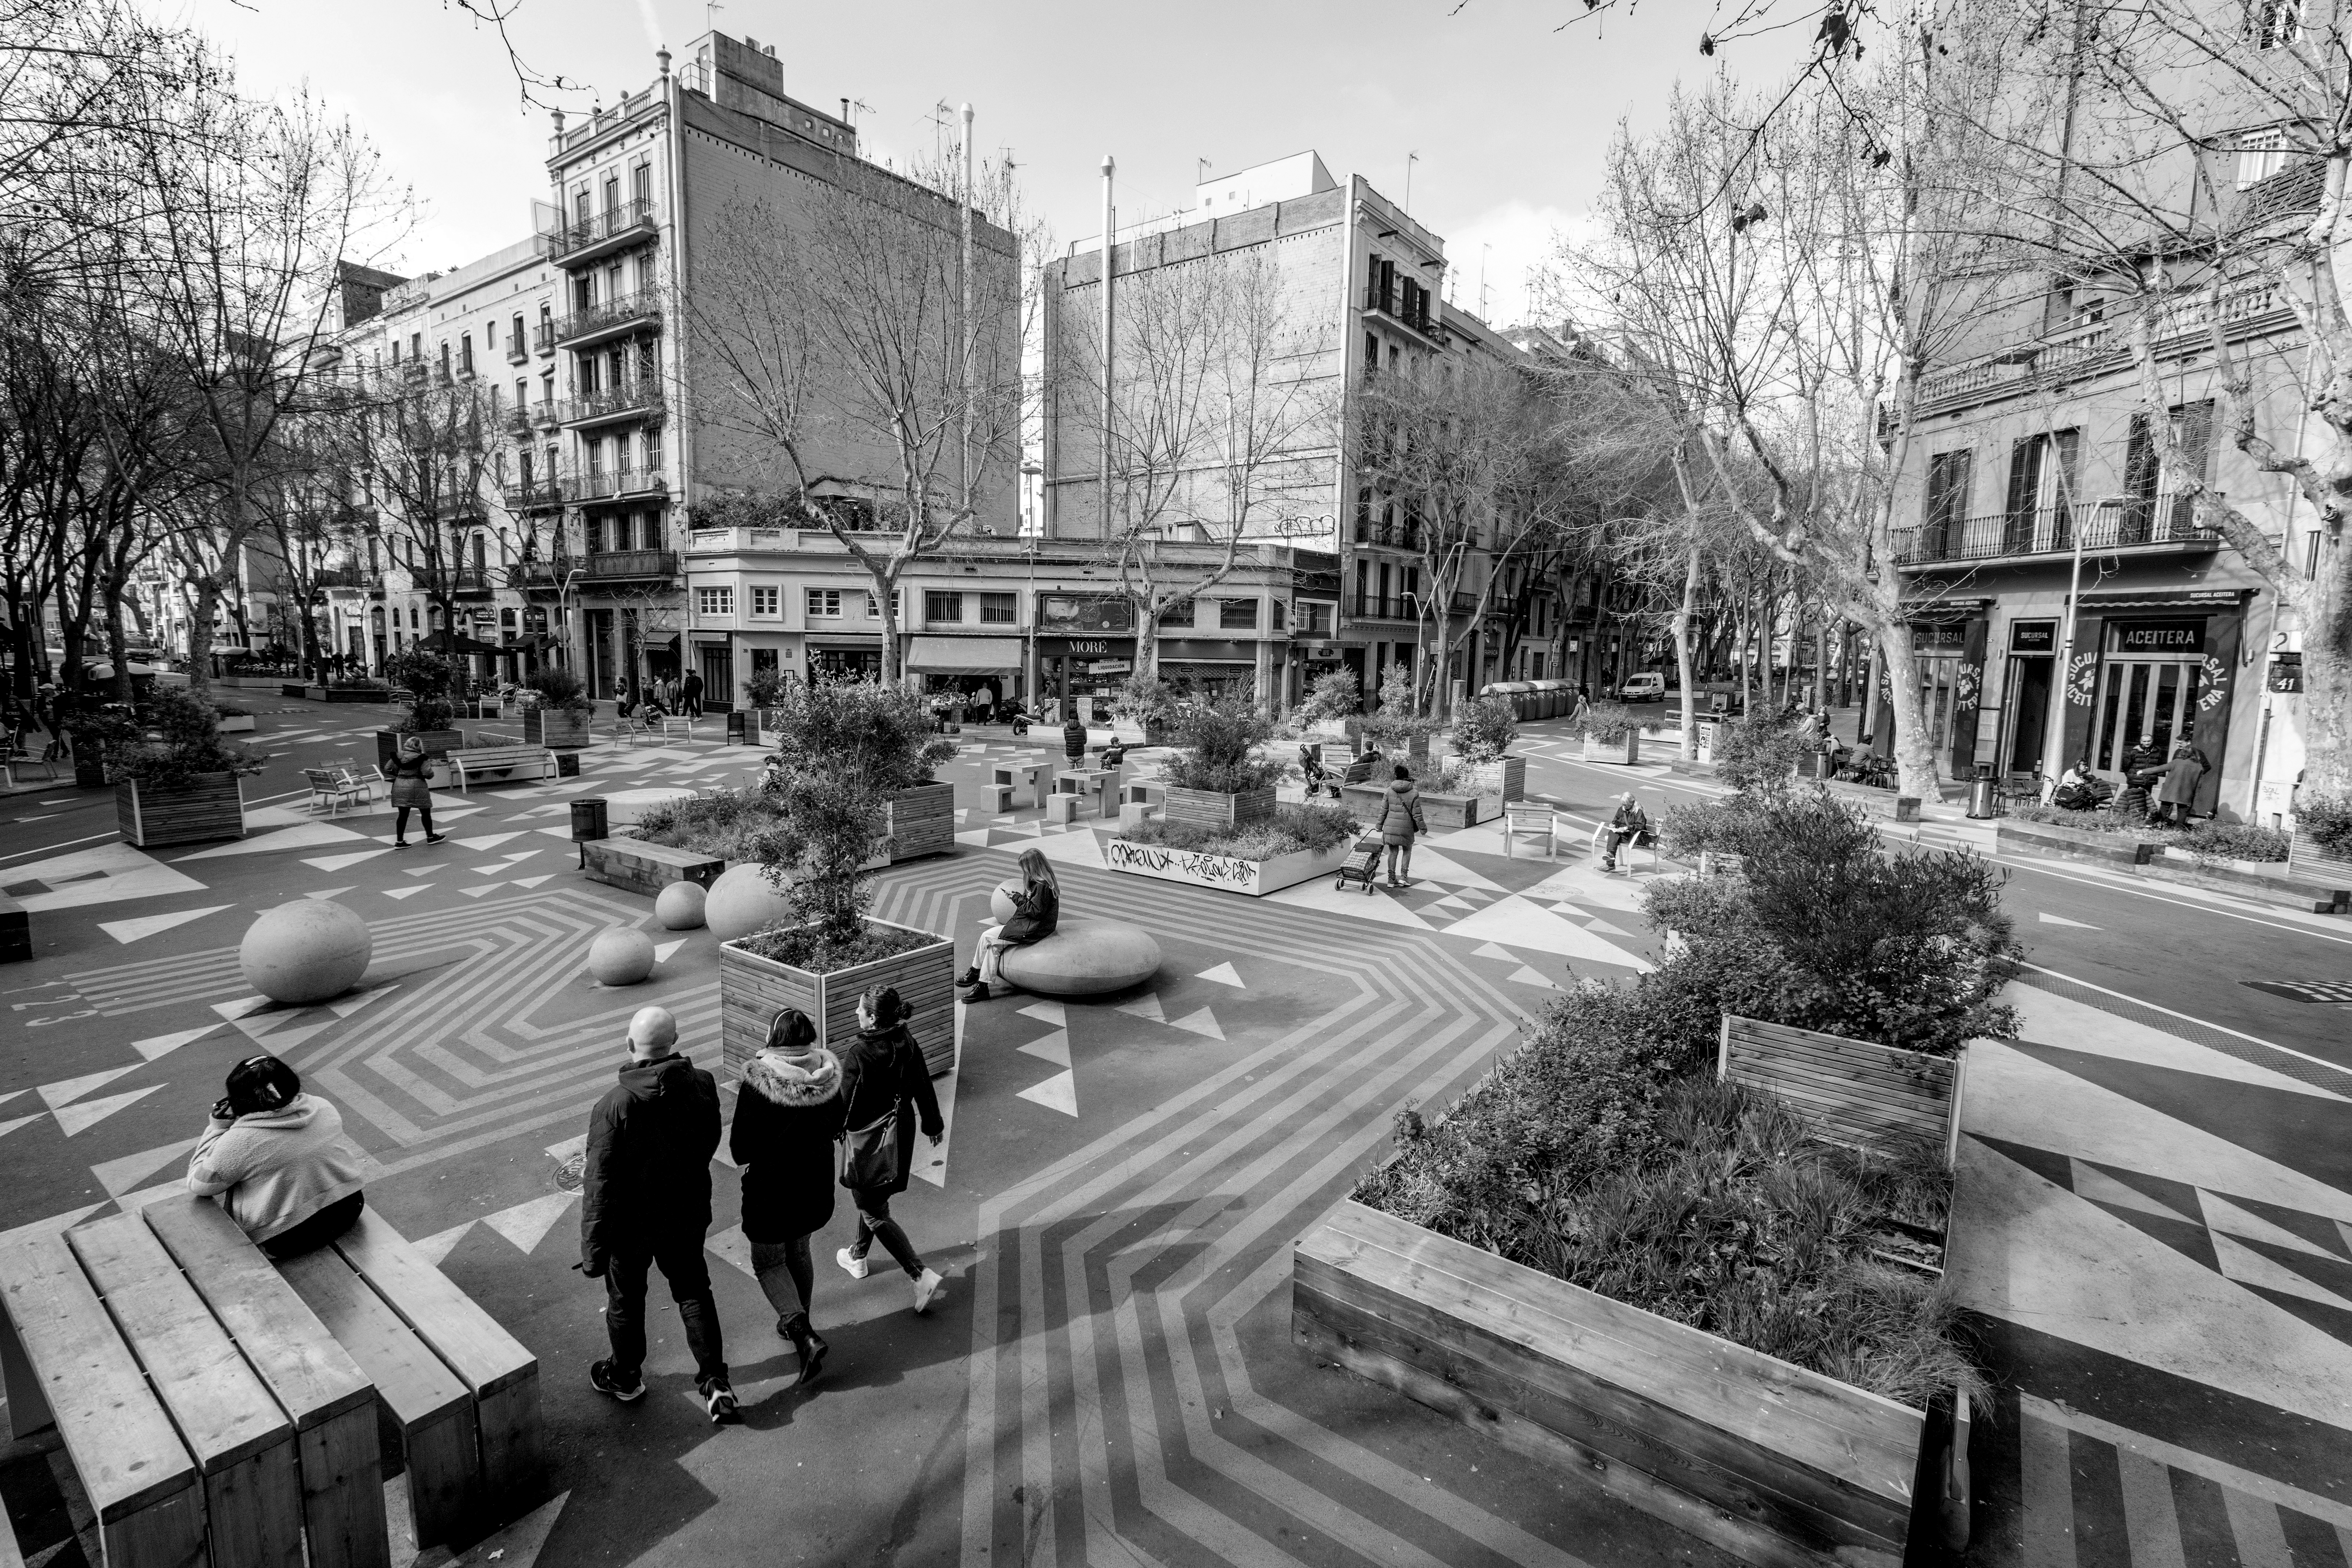 Superblock, Sant Antoni district, Barcelona, 2020. ©Gunnar Knechtel